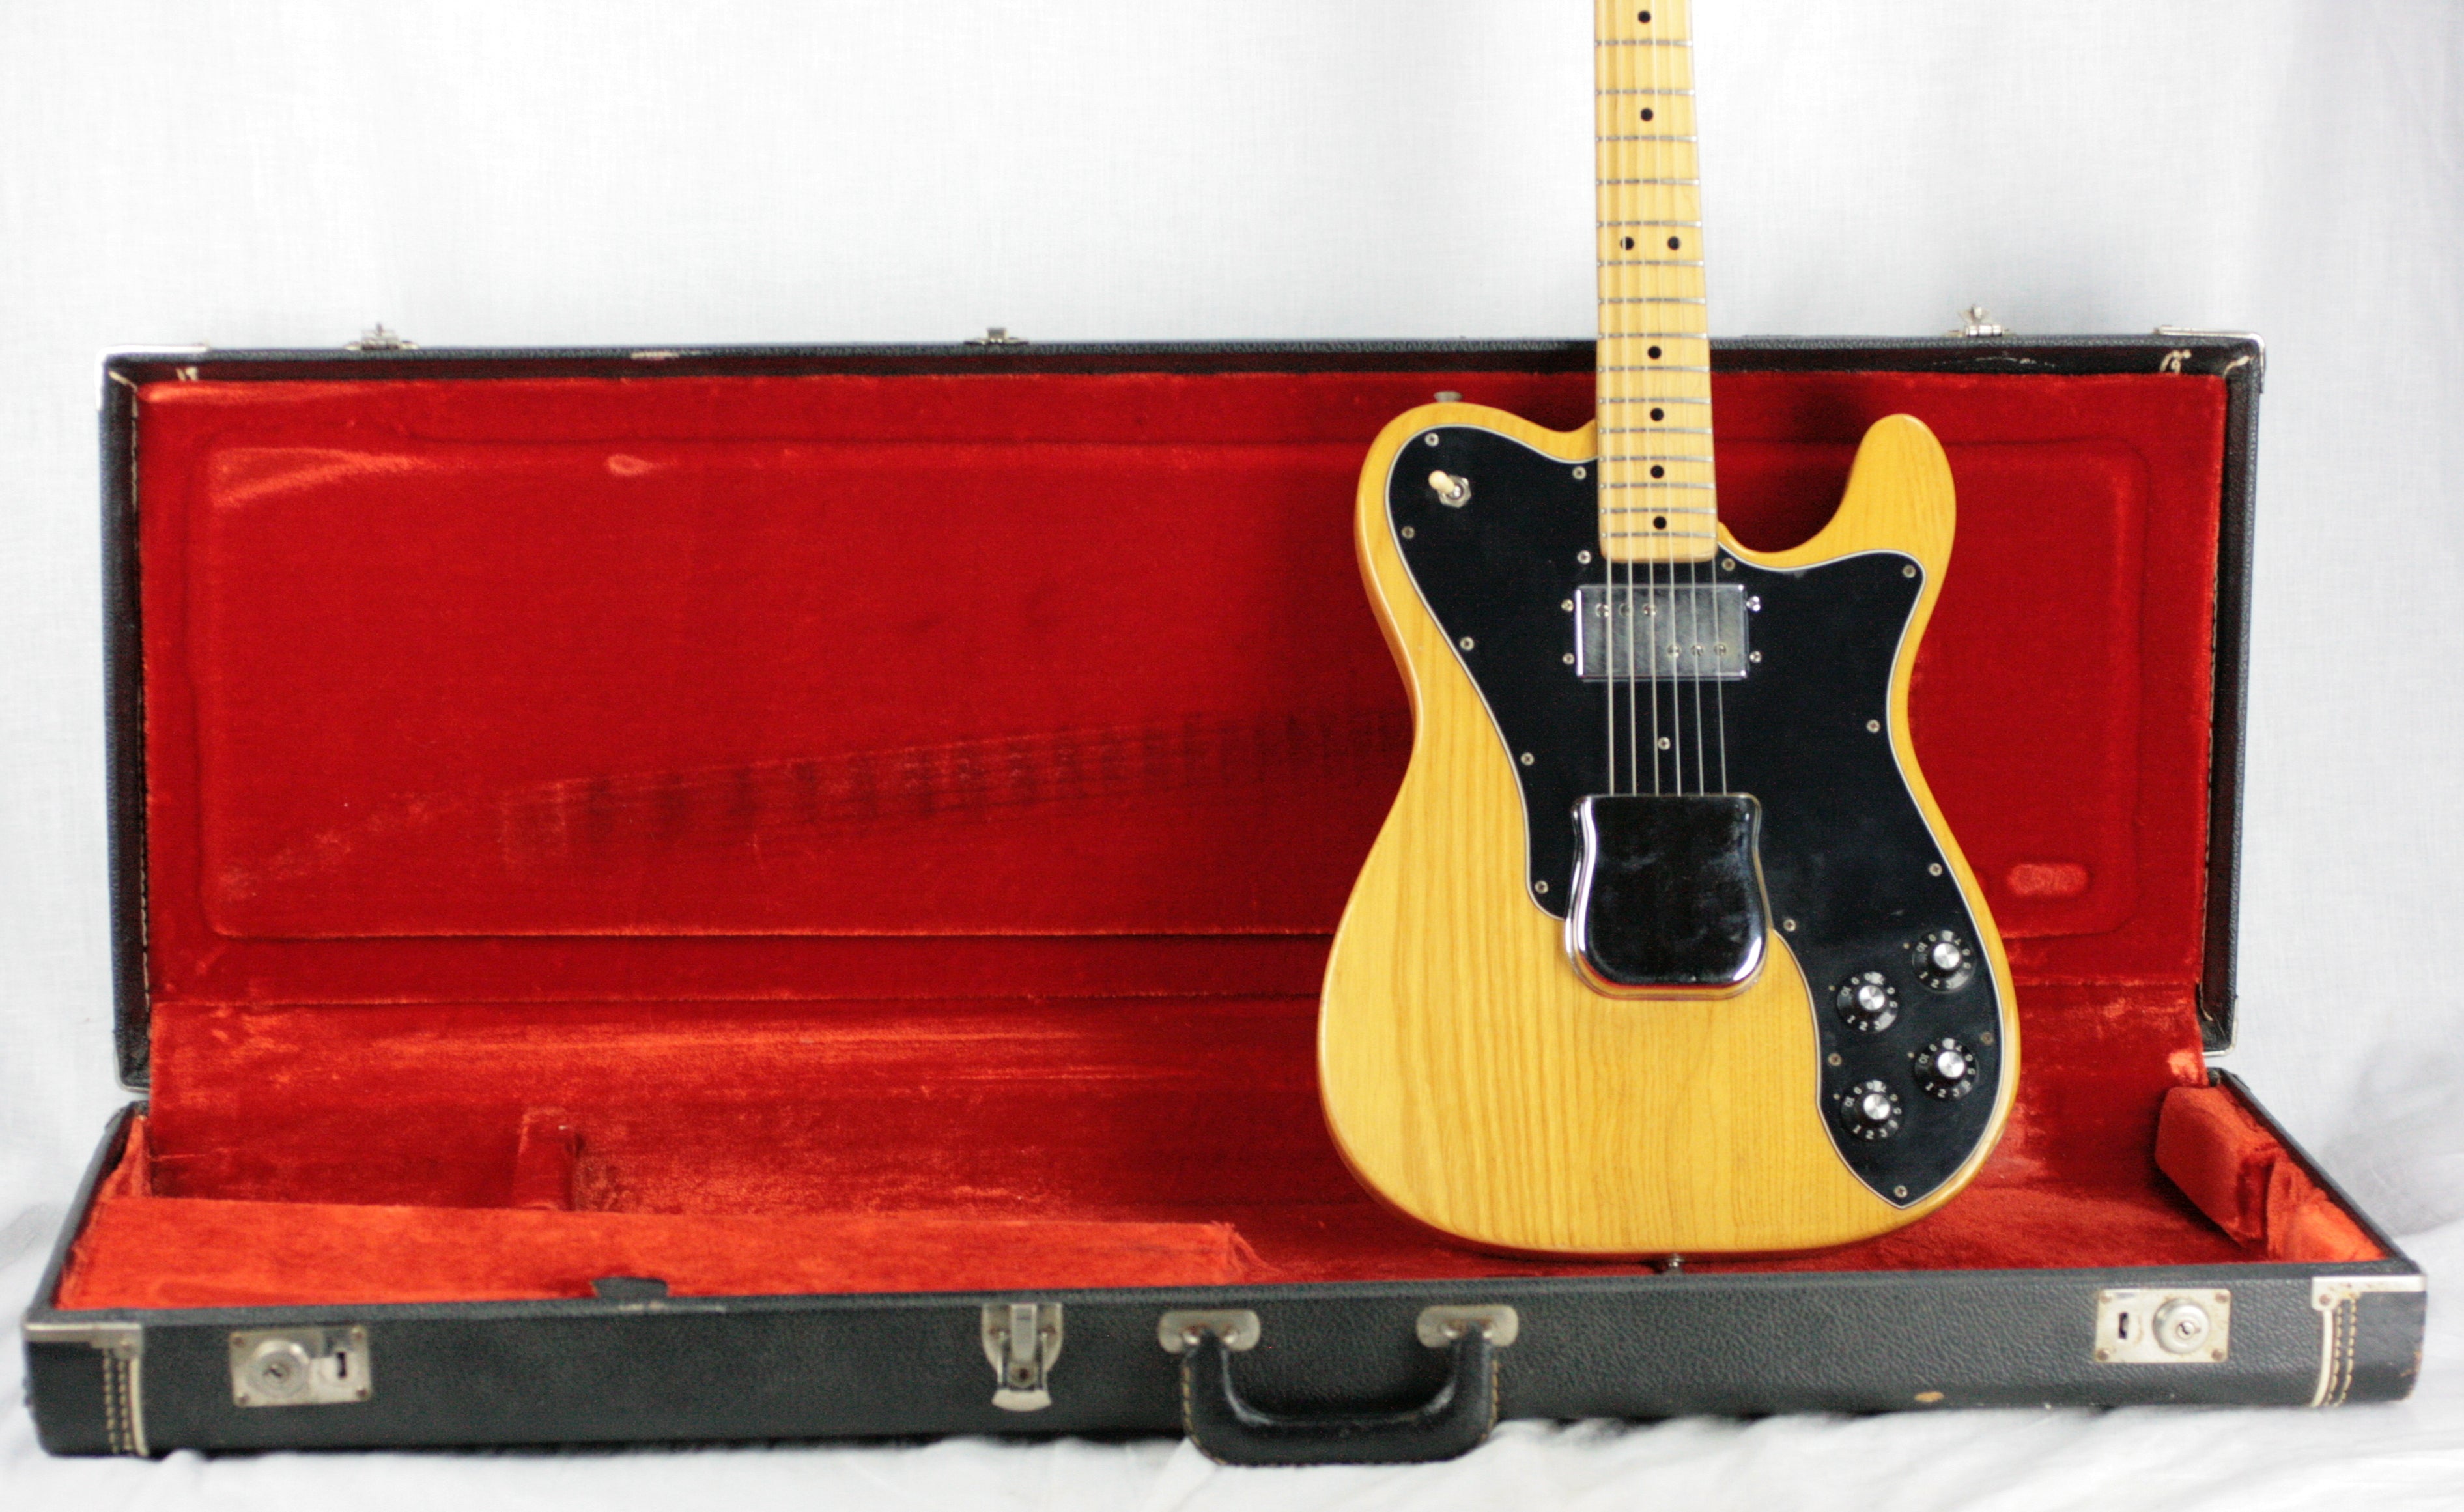 *SOLD*  1976 Fender Telecaster Custom in Natural - 100% Original, Lightweight Tele, Keith Richards, 1970's